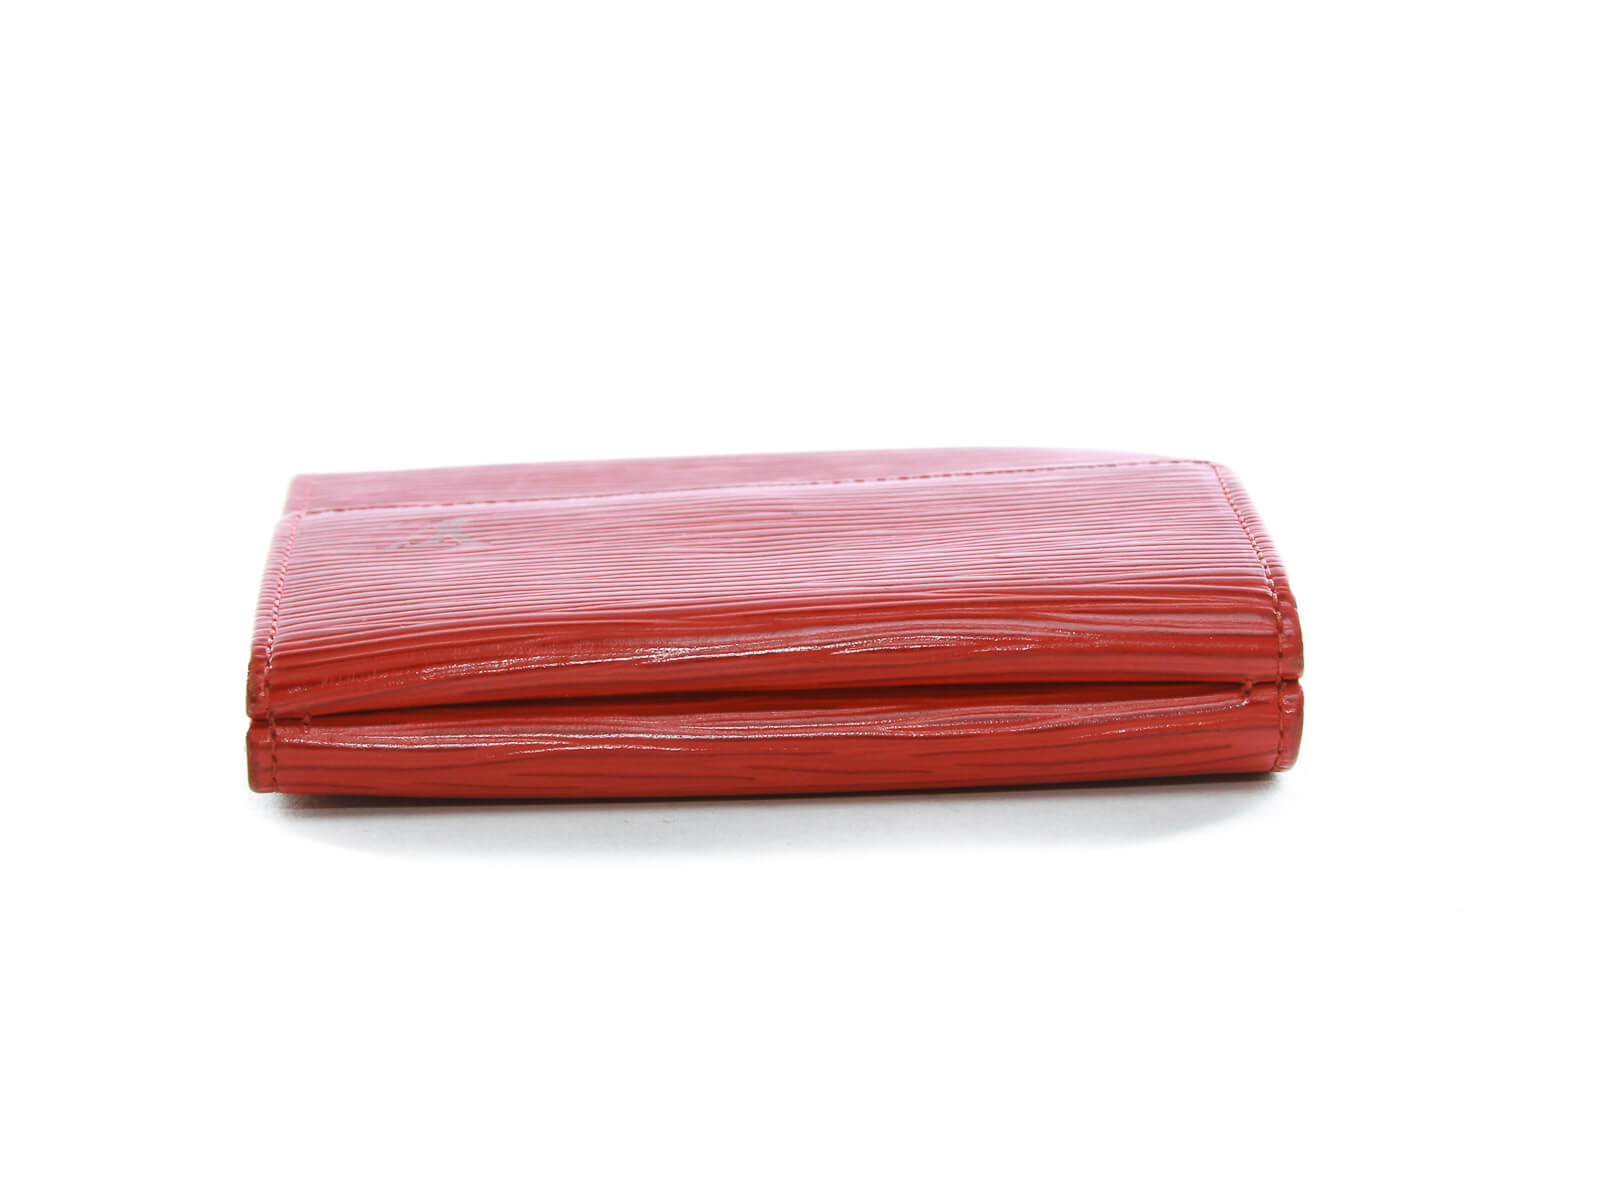 Louis Vuitton International Wallet - Red EPI Leather